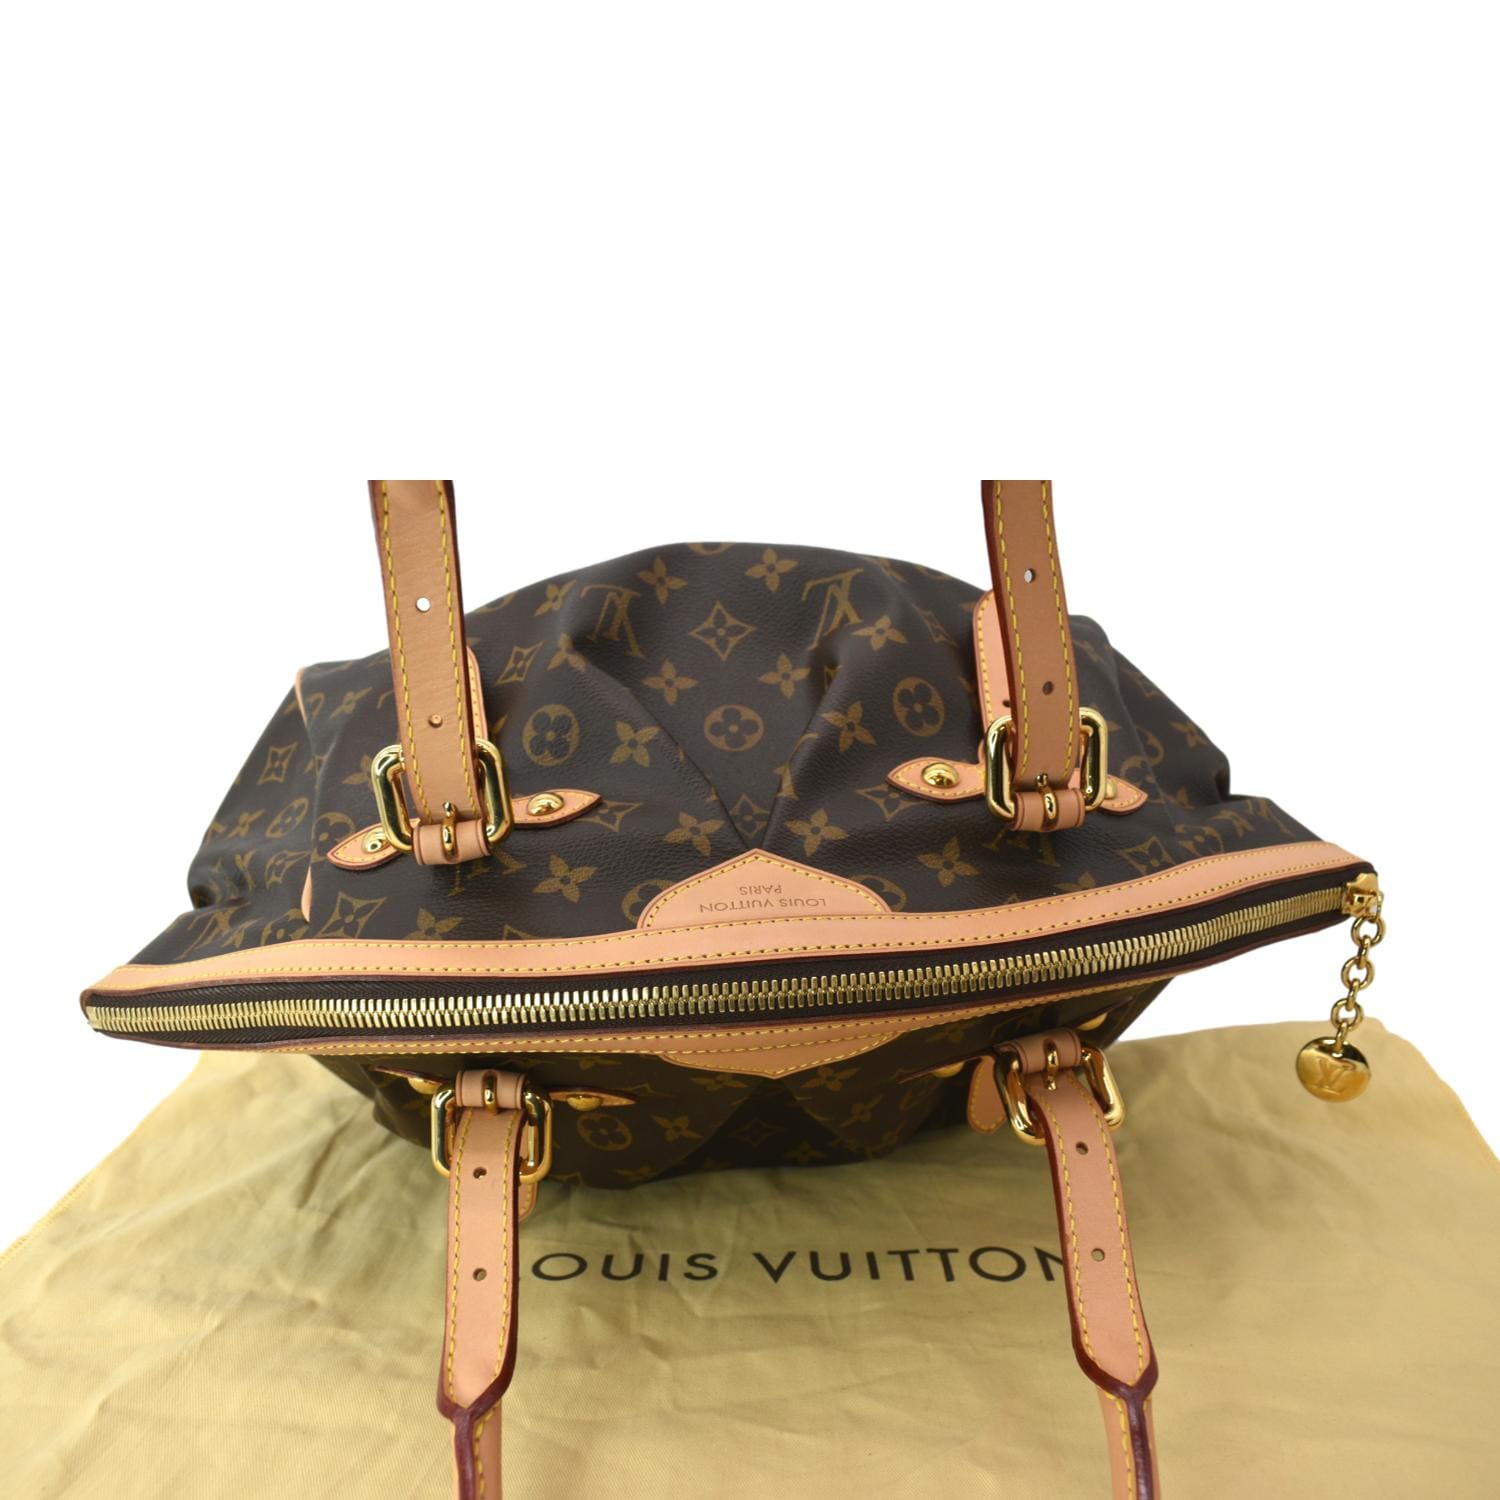 Louis Vuitton Tivoli GM Monogram Shoulder Bag – I MISS YOU VINTAGE